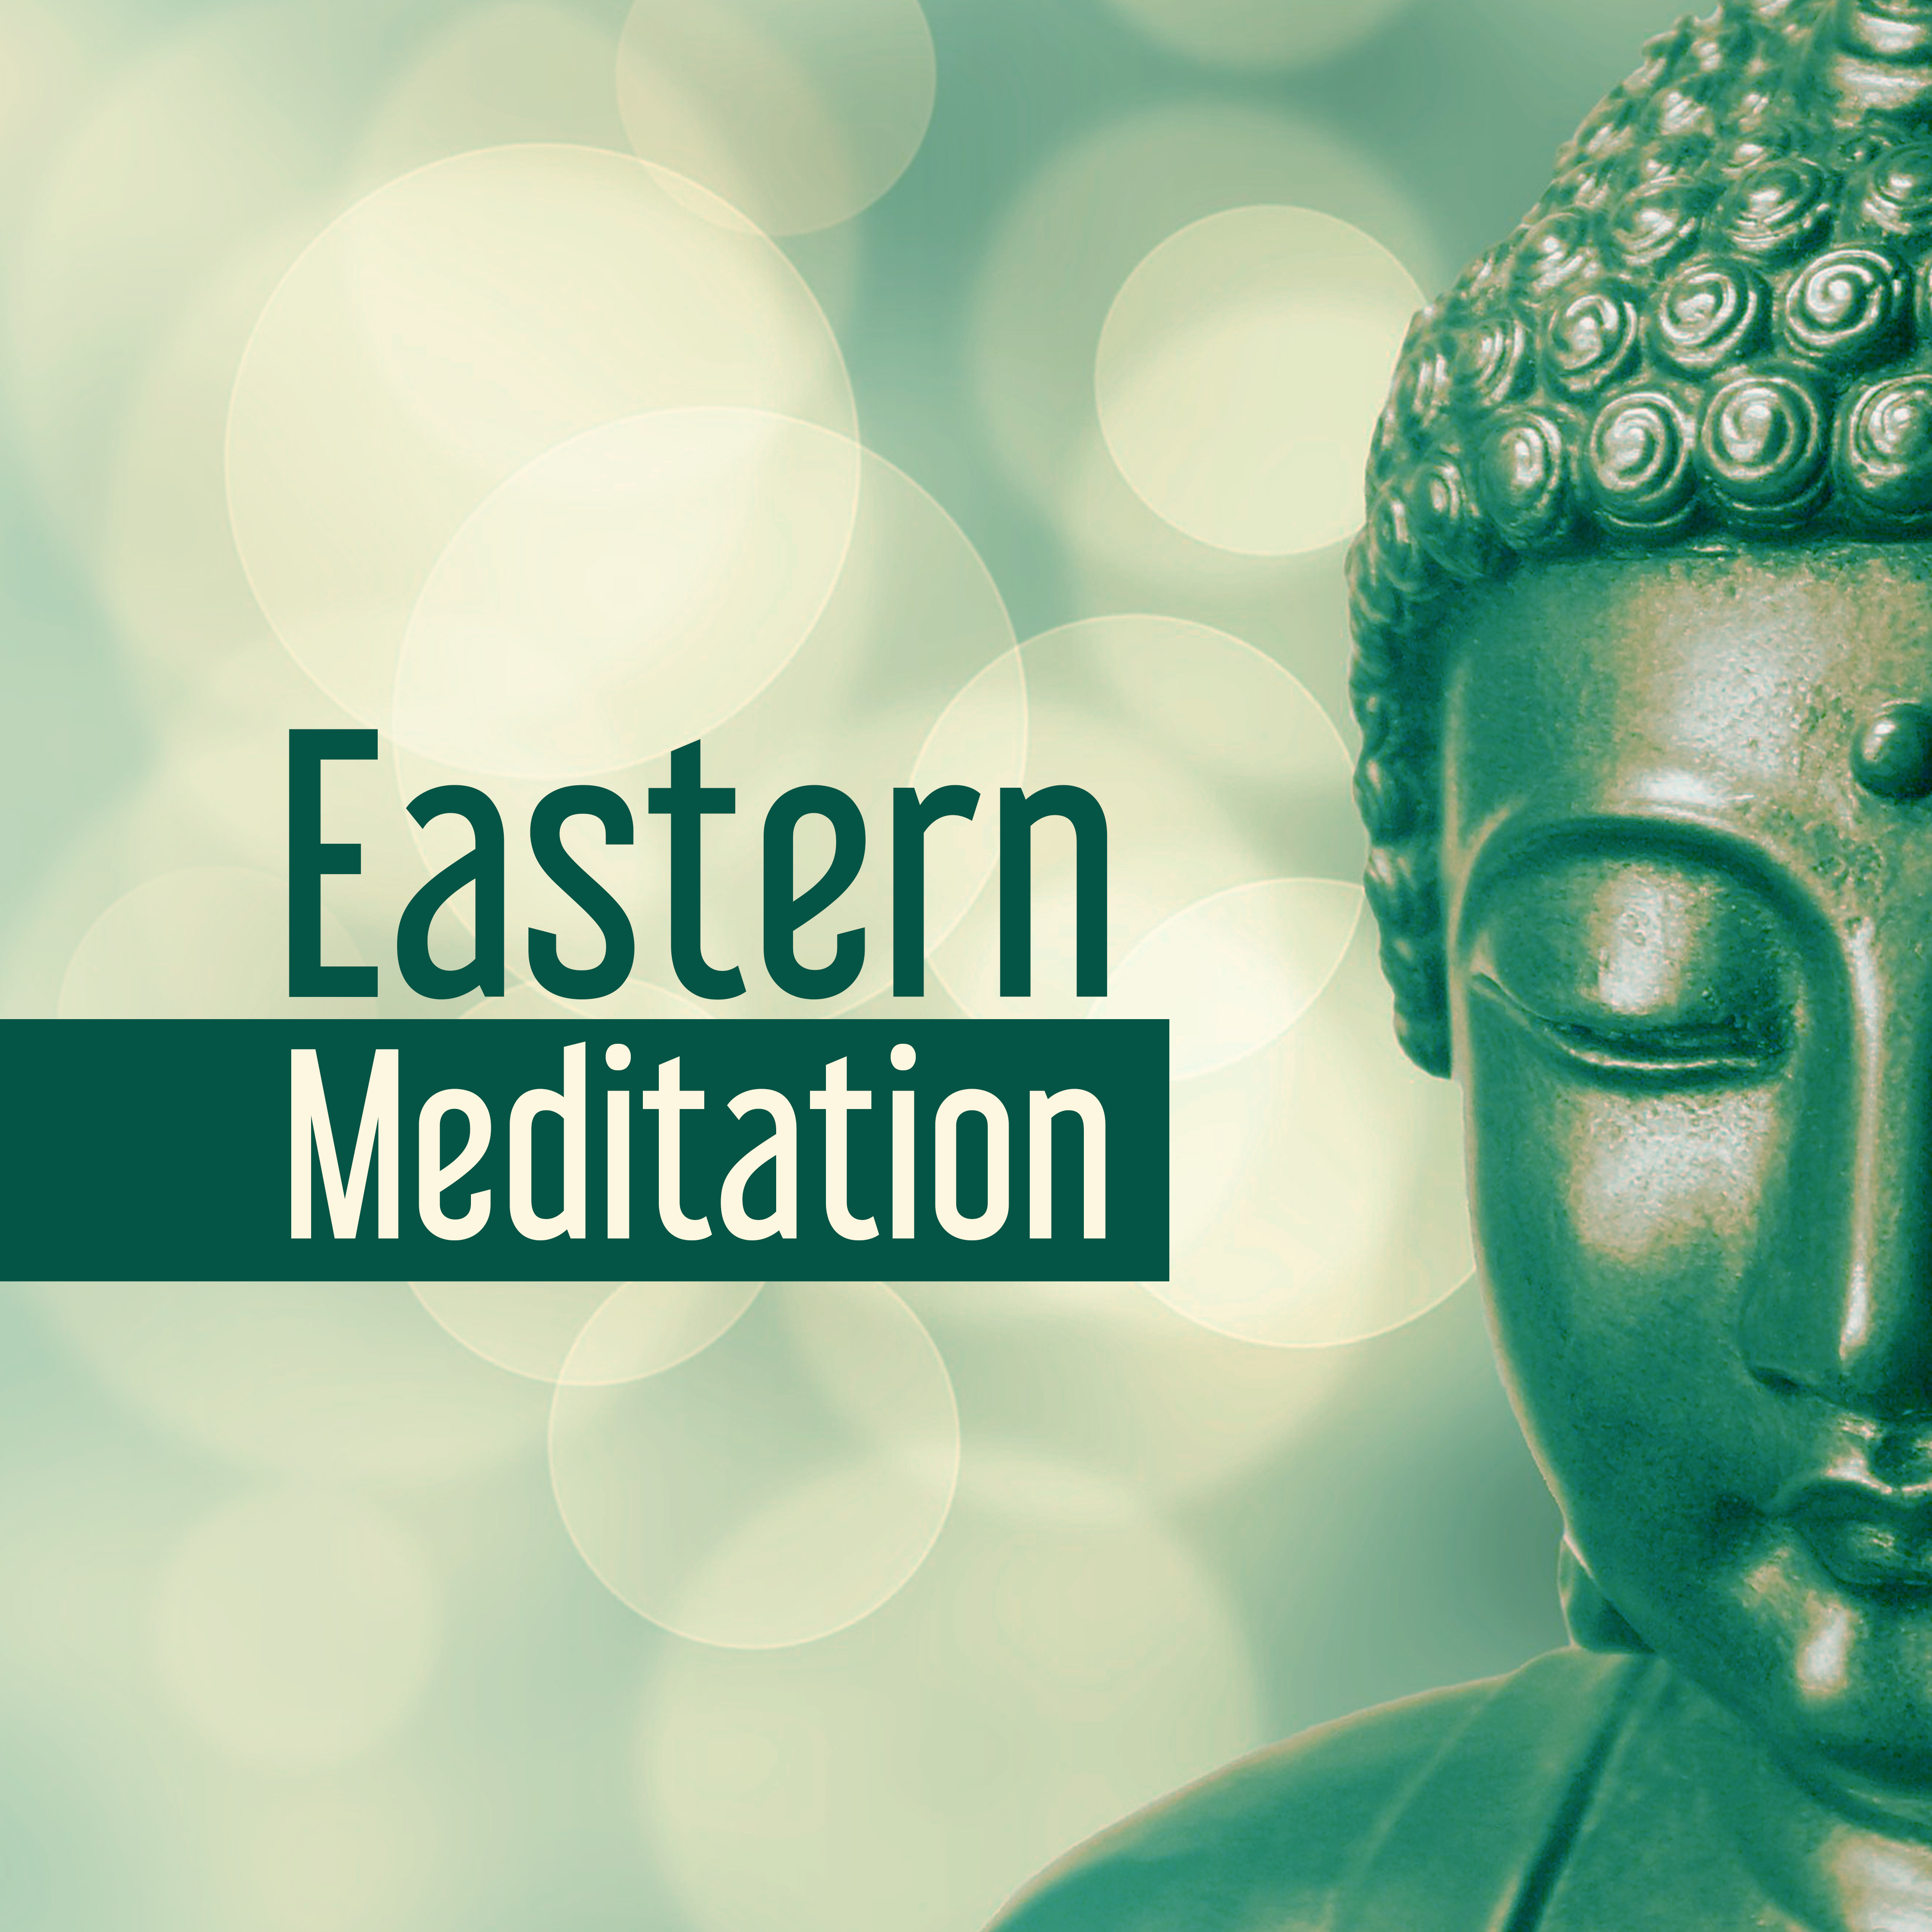 Eastern Meditation – Yoga Music, Deep Sleep, Music for Meditation, Nature Sounds, Reiki Music, Focus & Calmness, Oriental Melodies